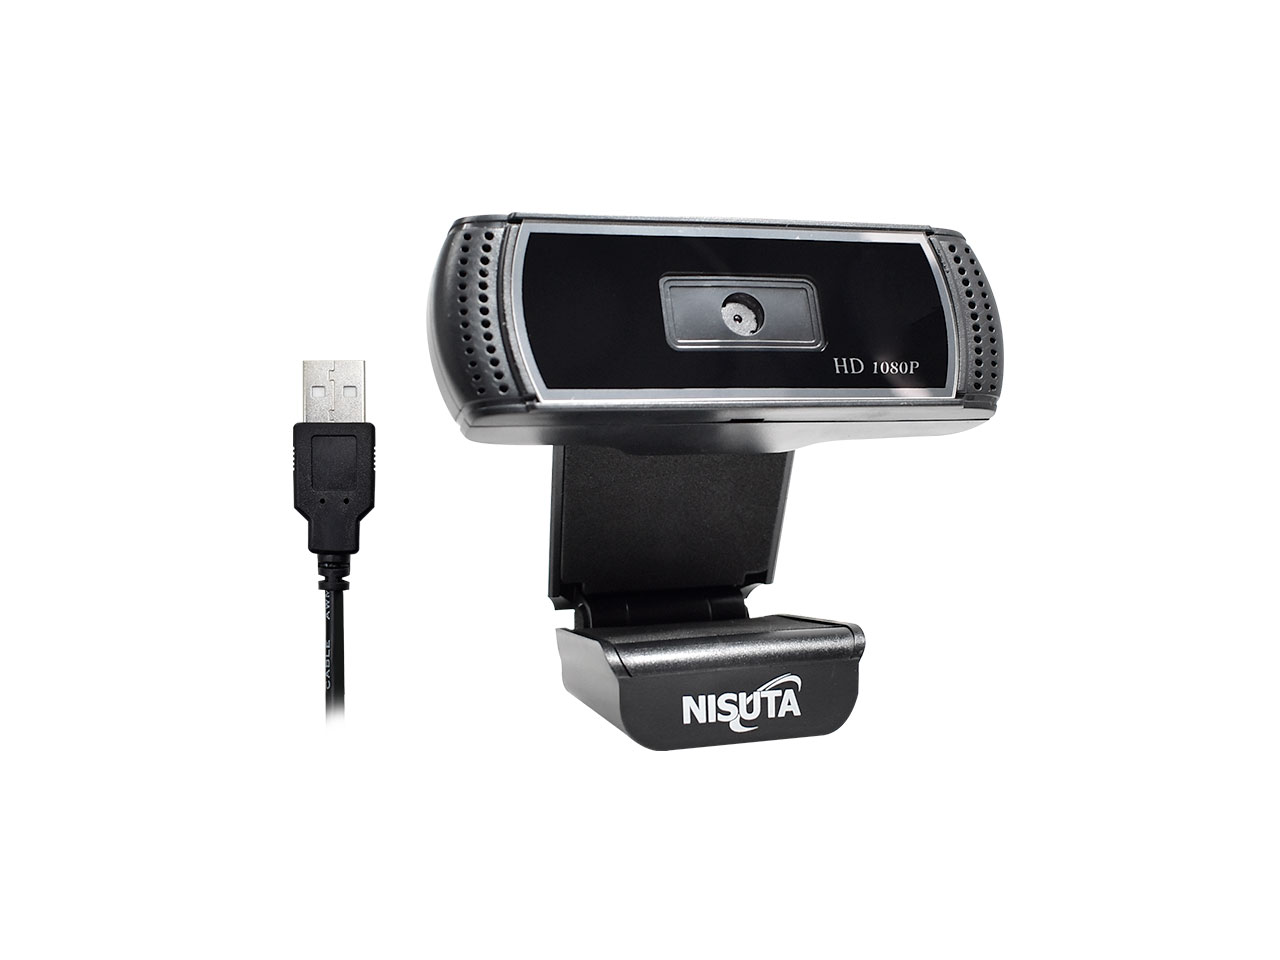 Webcam Camara Web Para Pc Full Hd 1080p Con Microfono Noga E Color